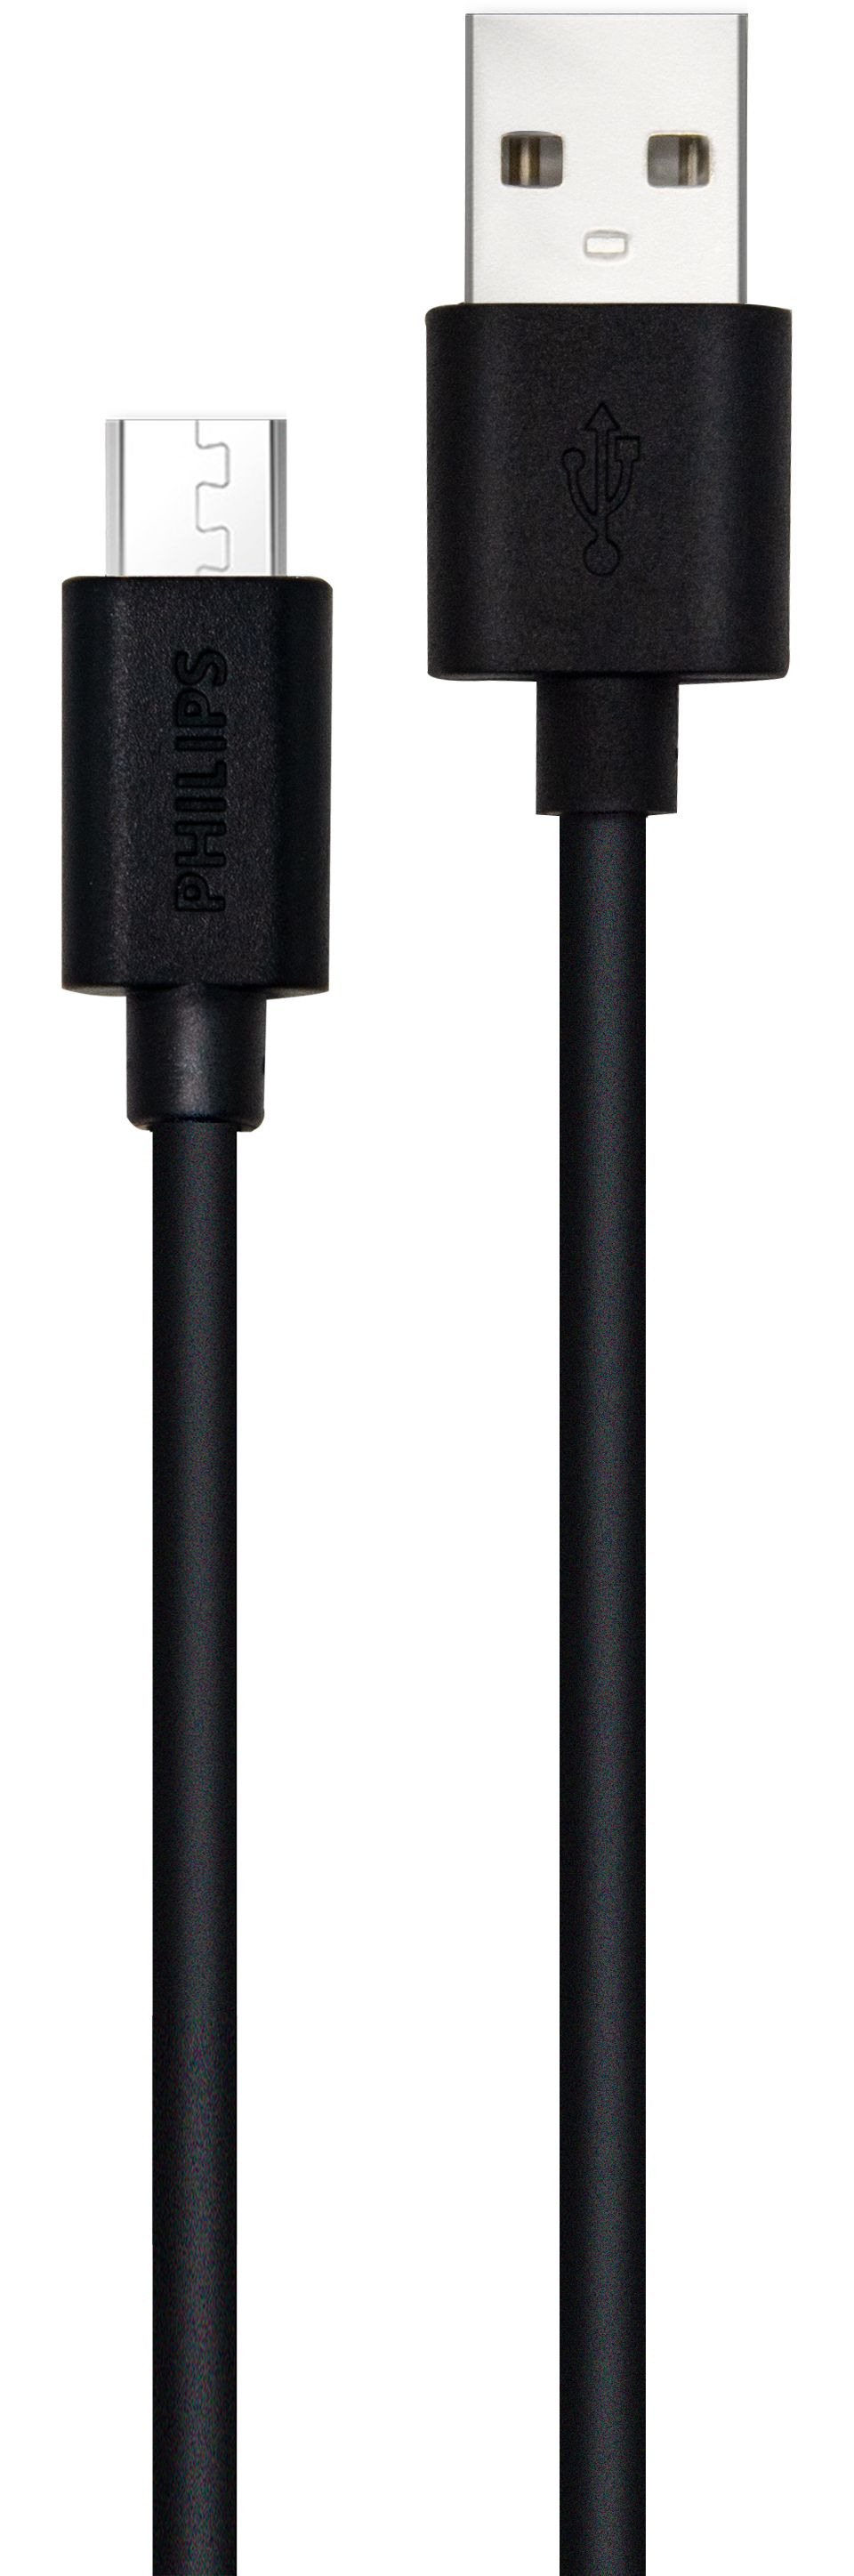 1,2m kabel USB na micro USB